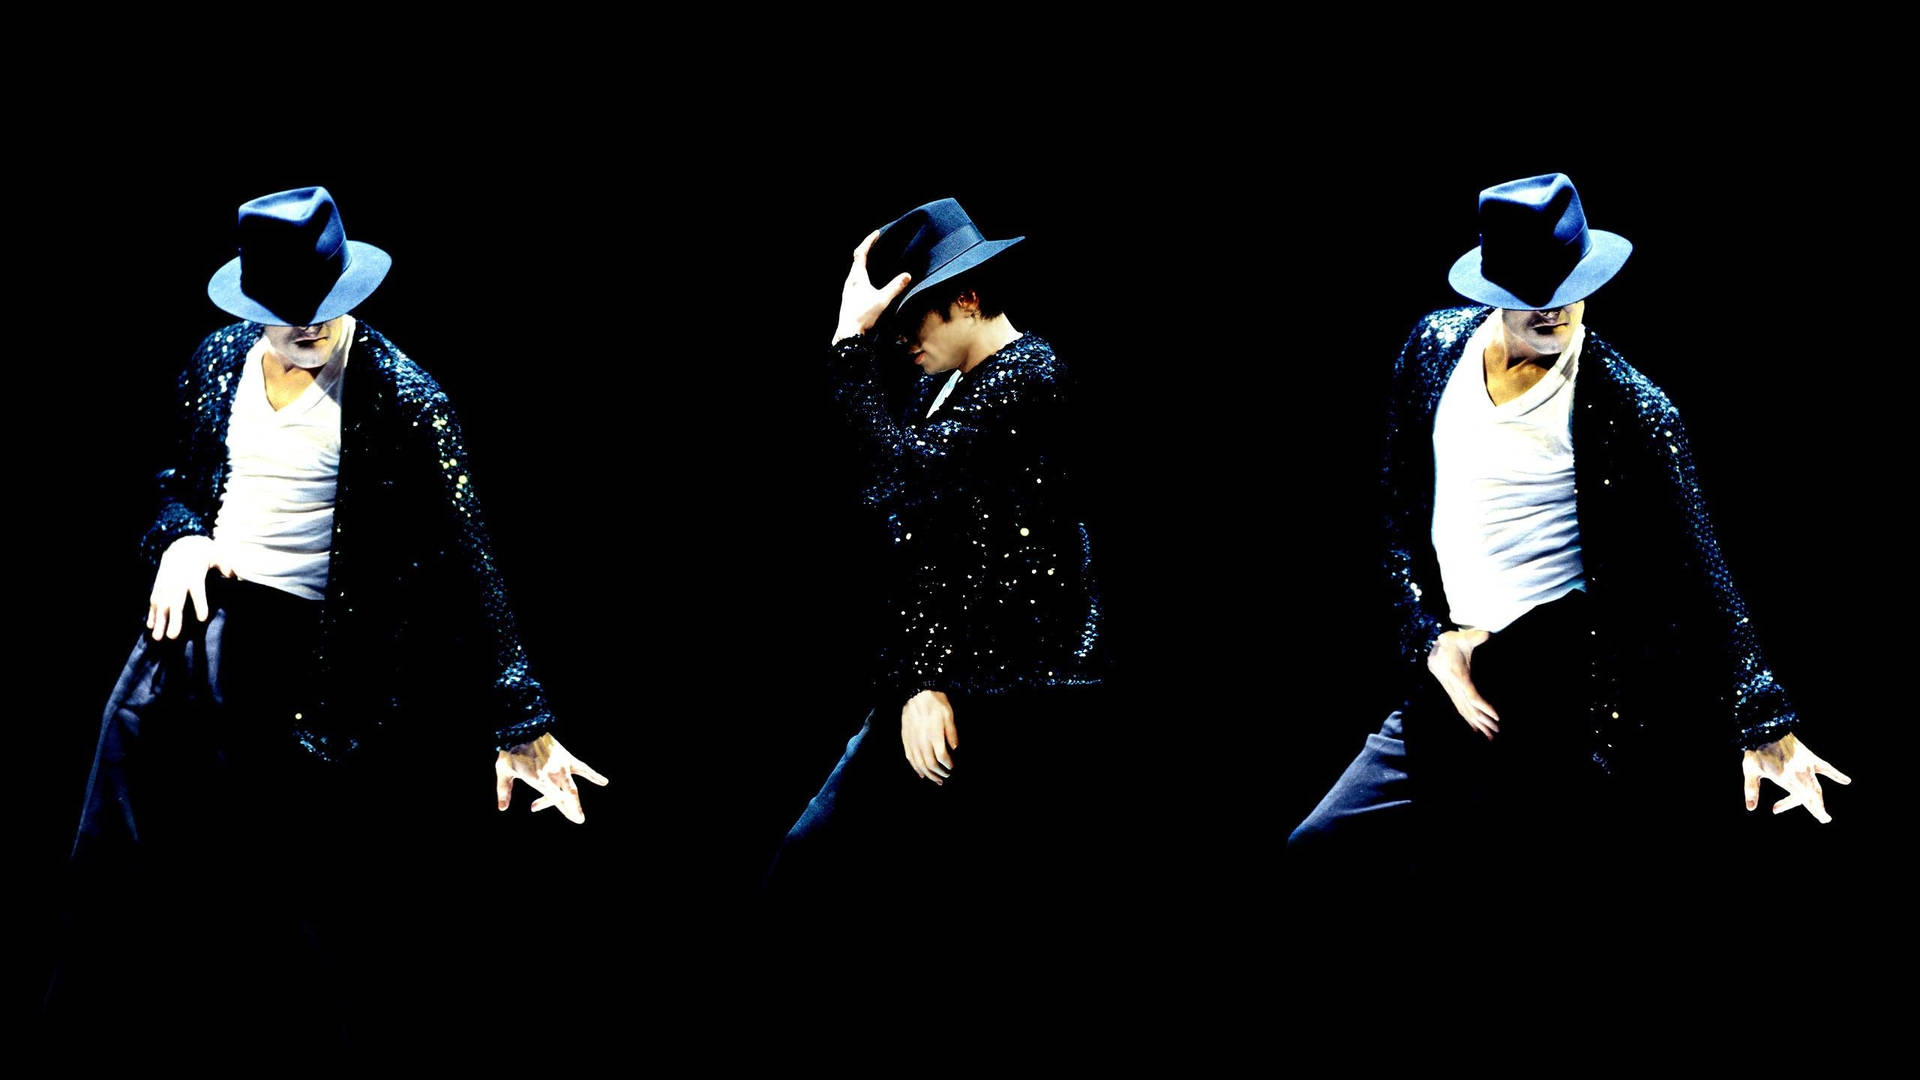 Michael Jackson Billie Jean Dance Pose Wallpaper